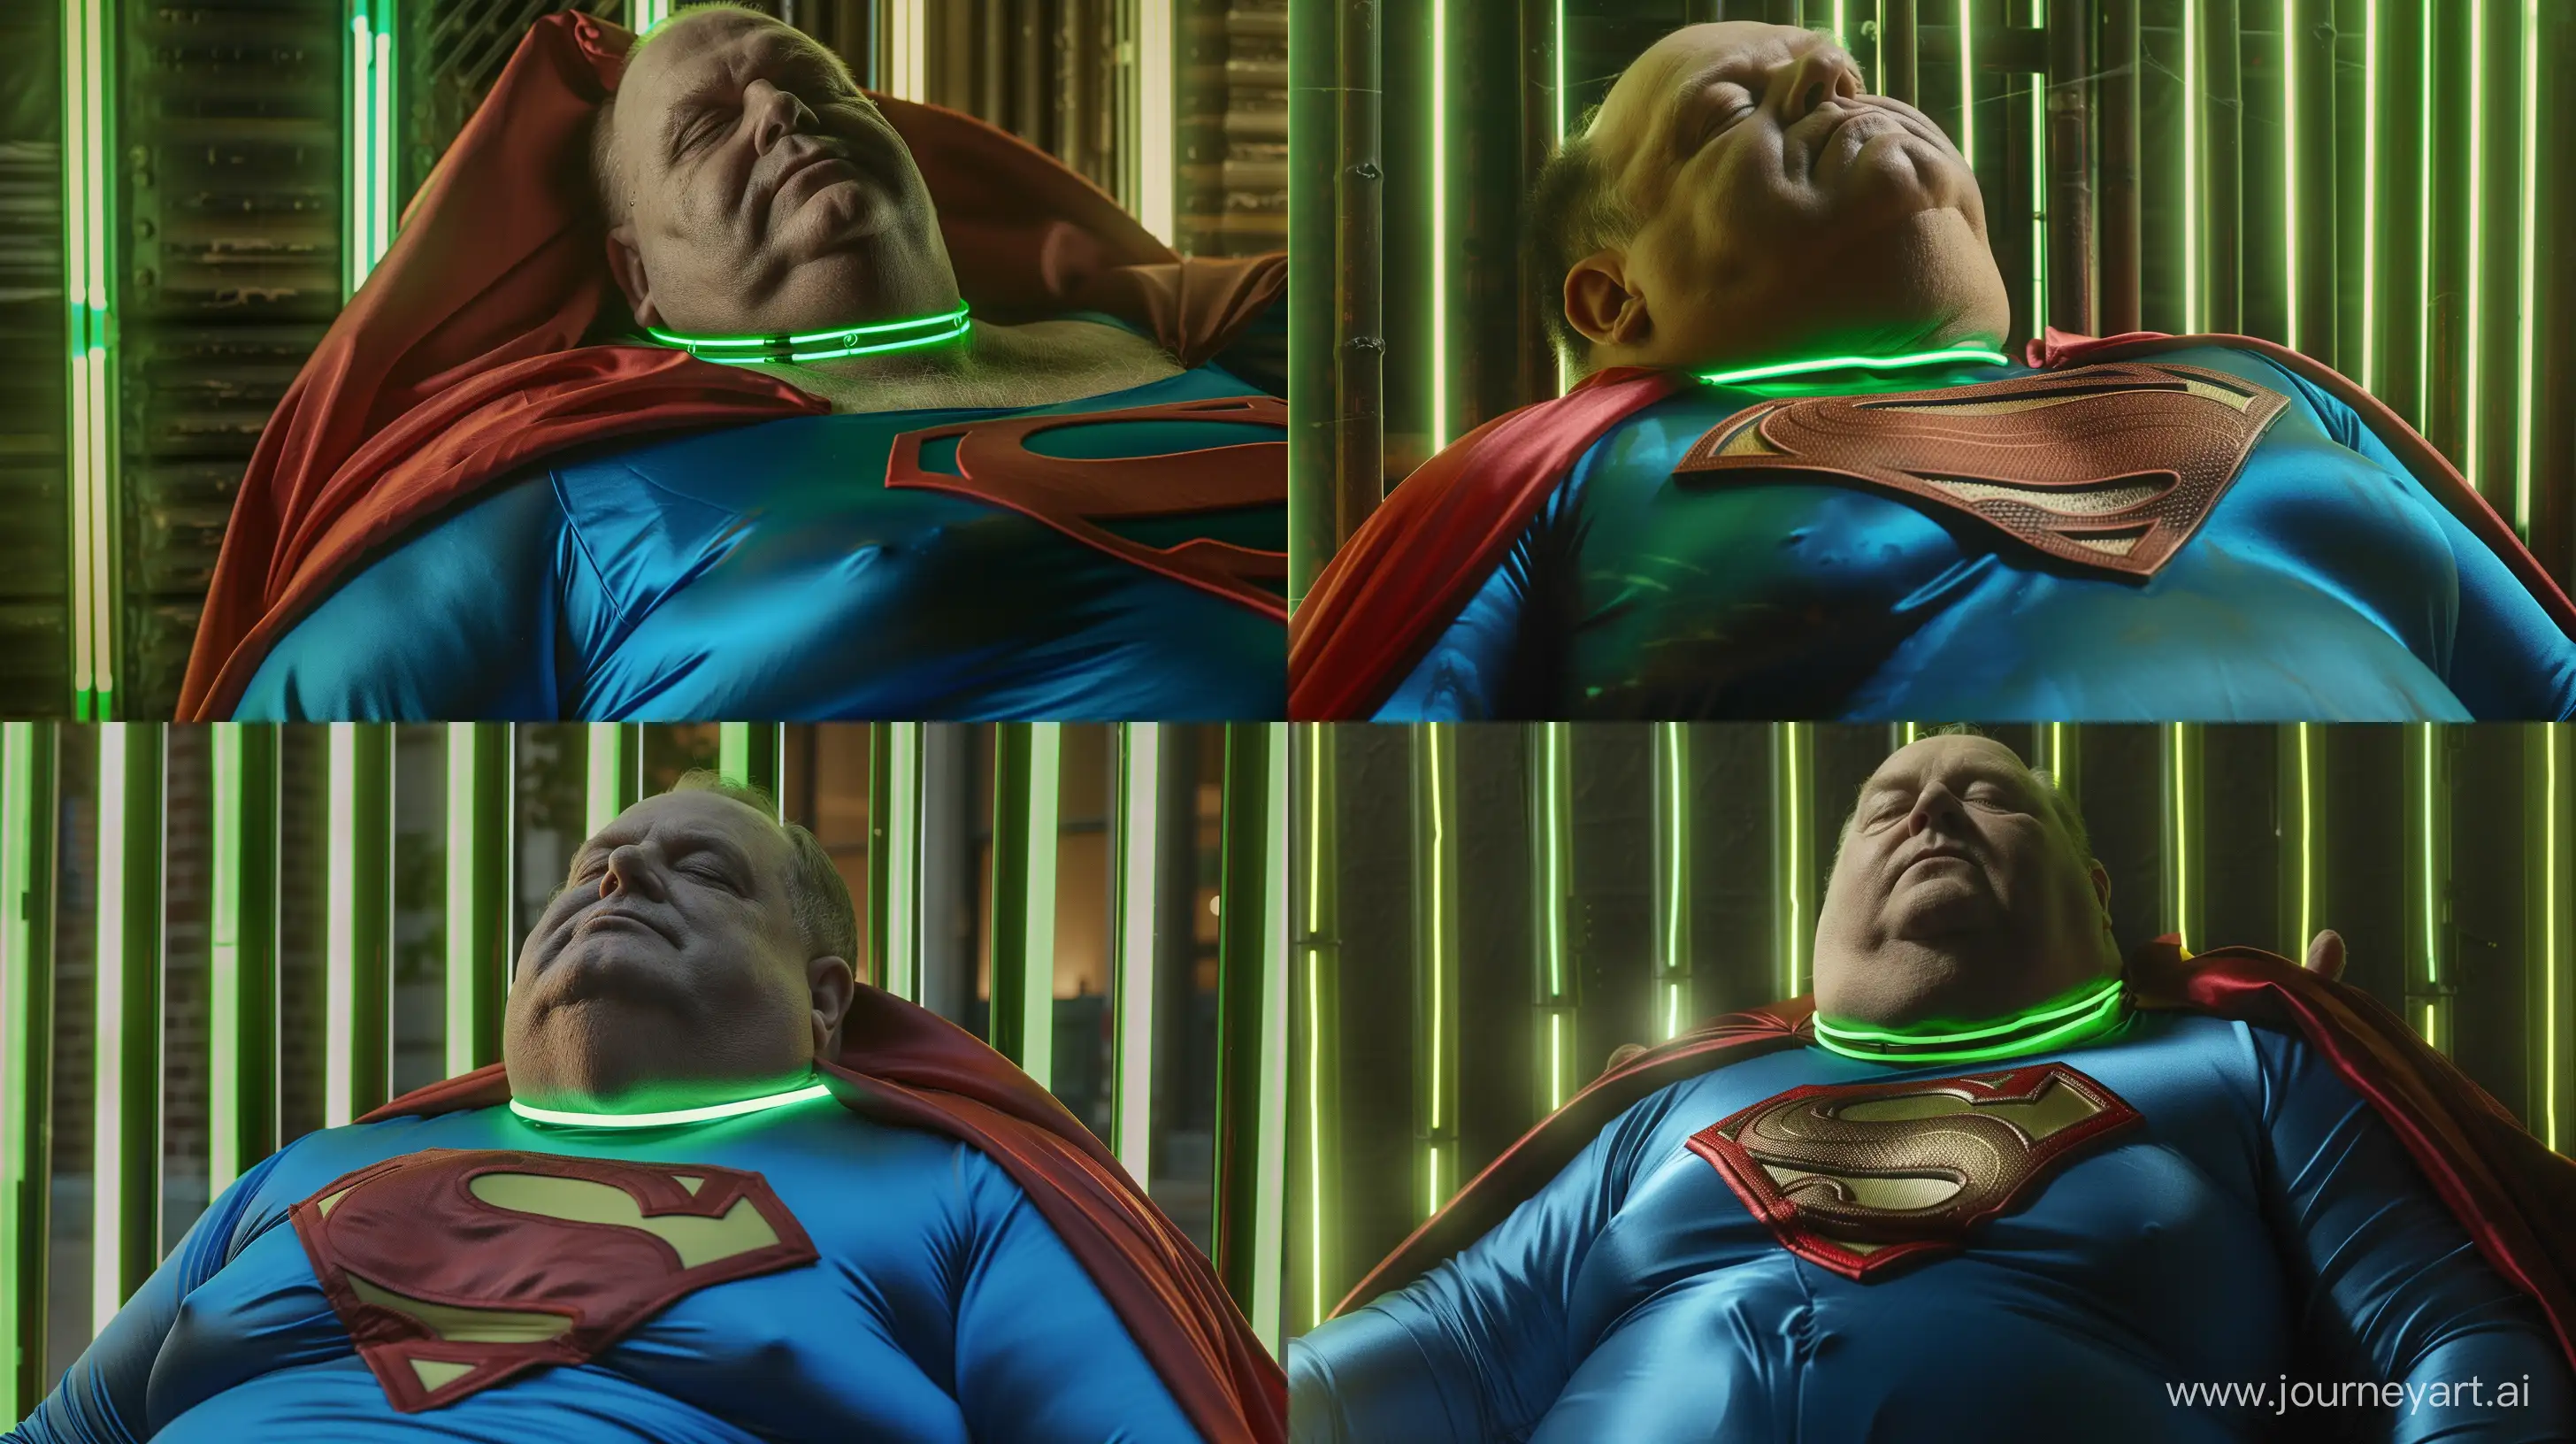 Elderly-Superman-Resting-in-Neon-Glow-Against-Green-Bars